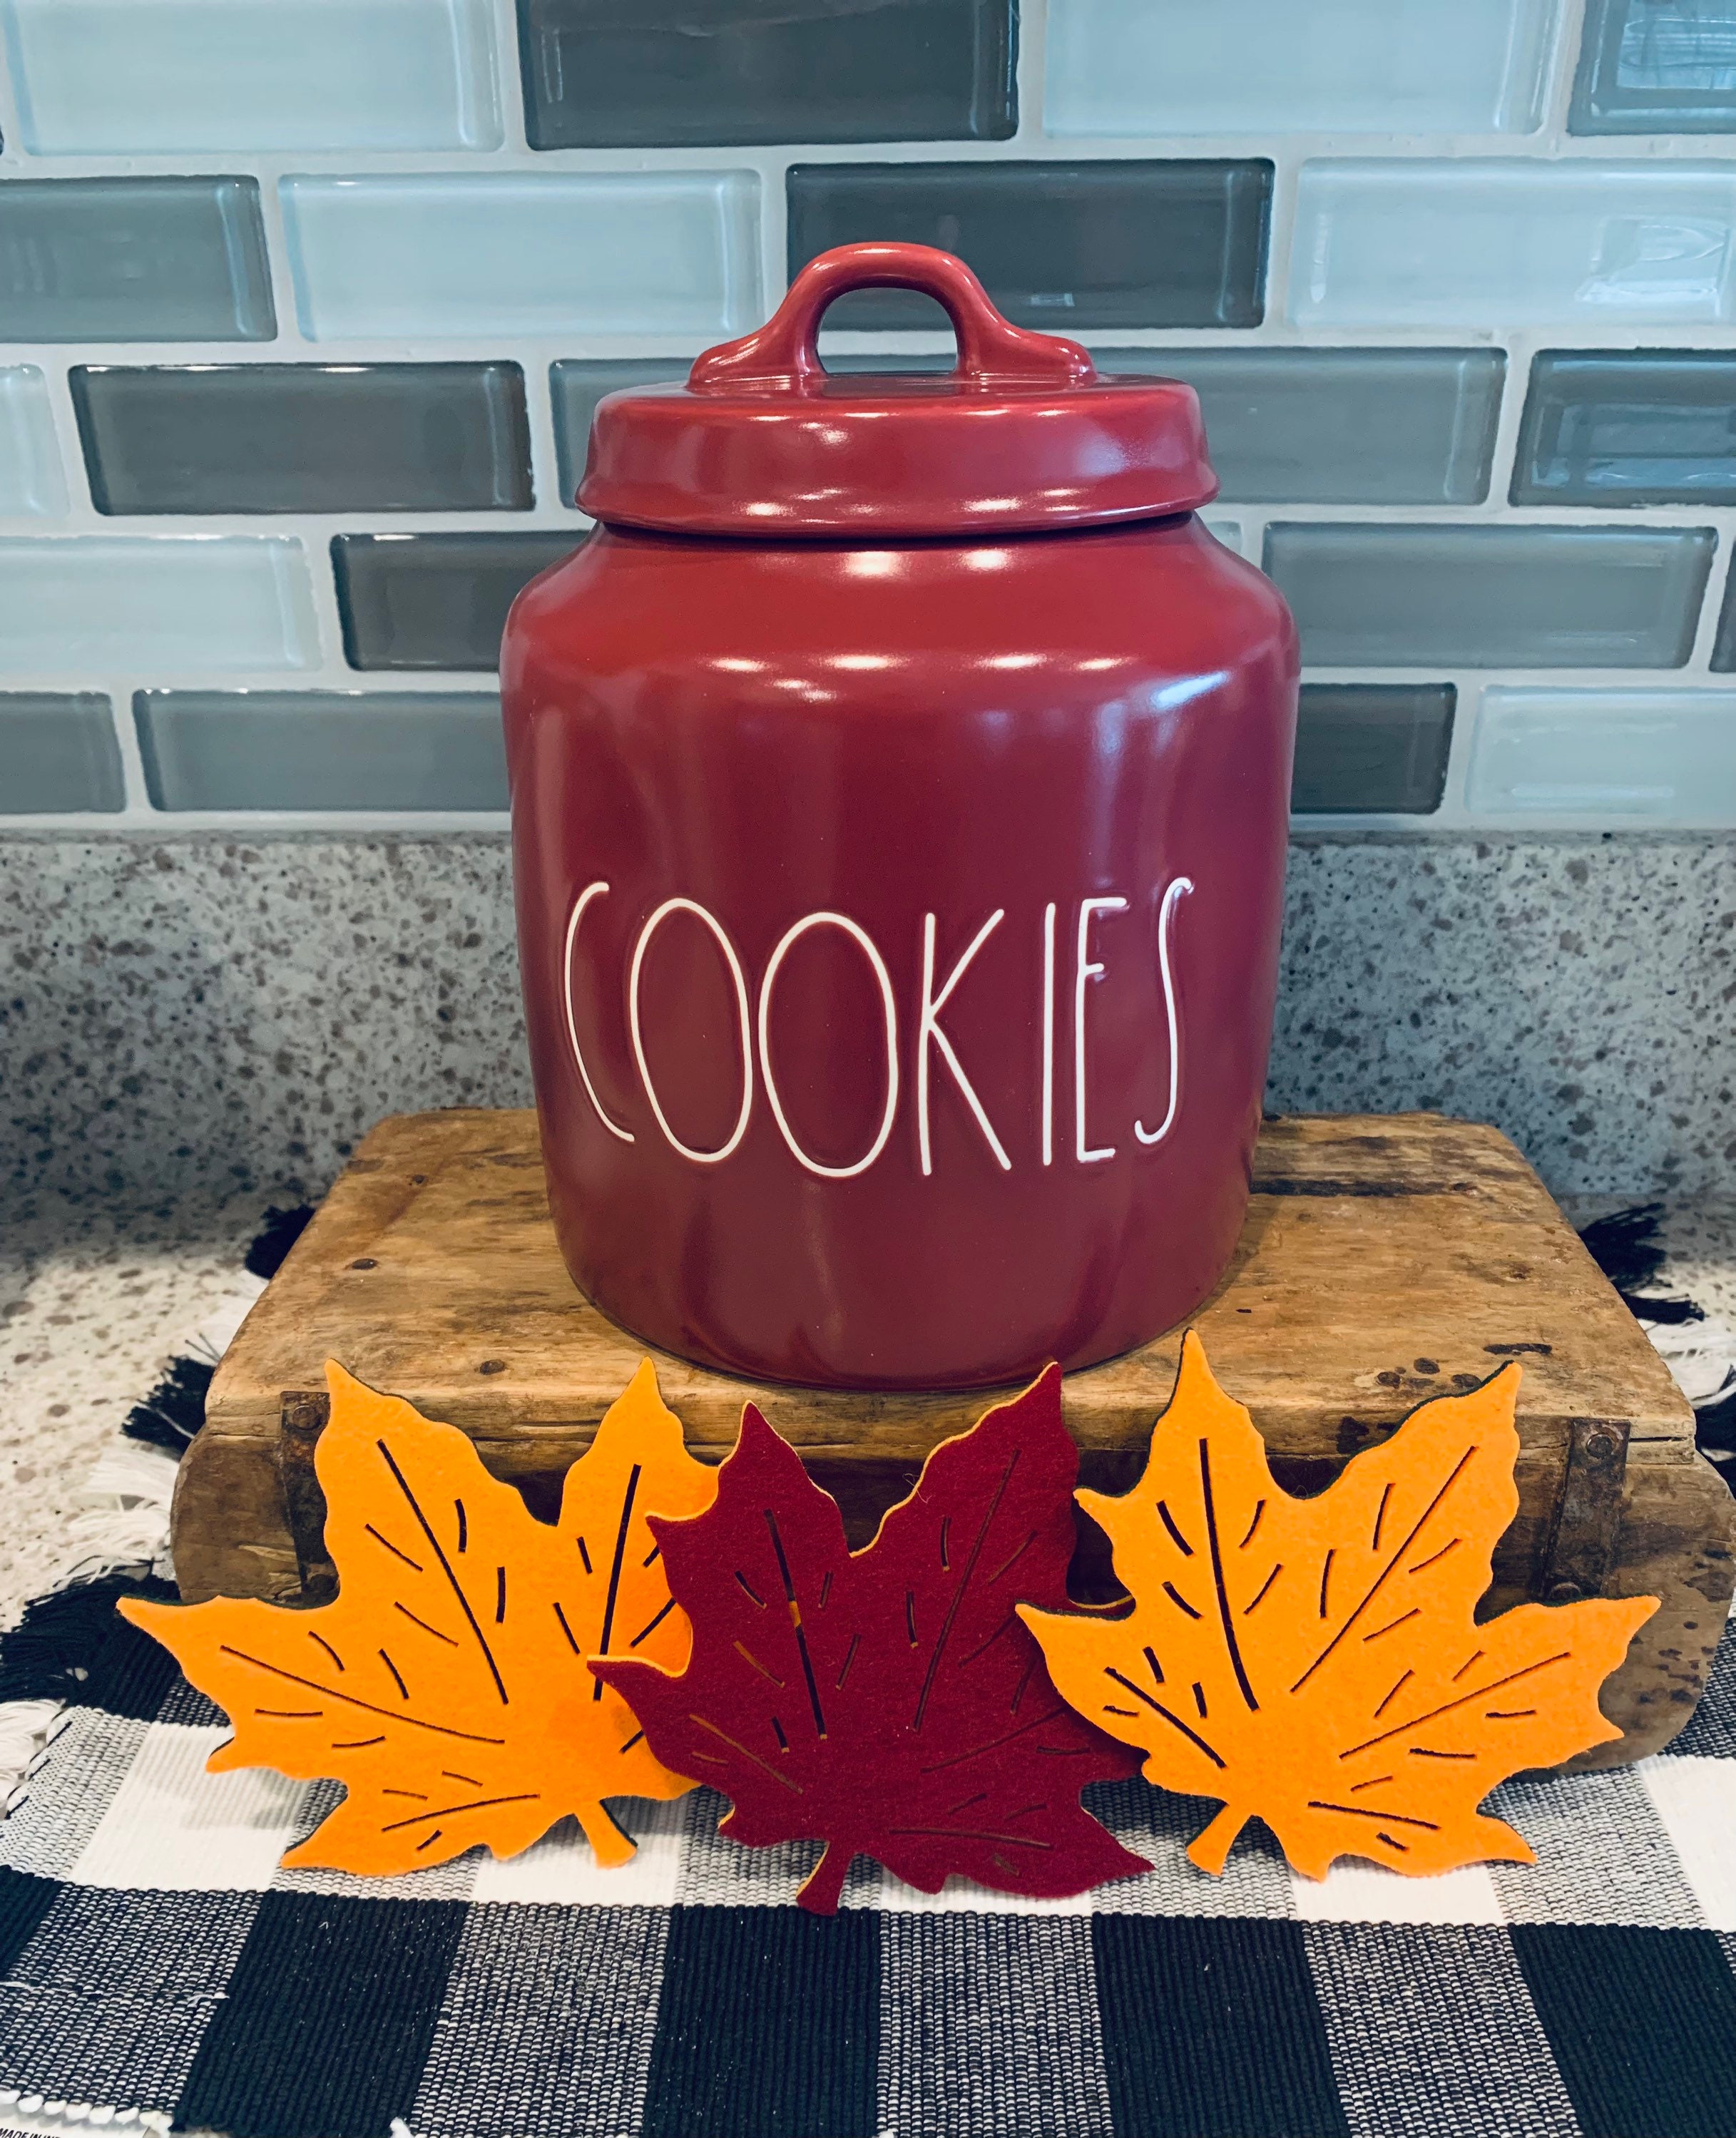 Rae Dunn Santa's Cookies Canister Cookie Jar, by Magenta